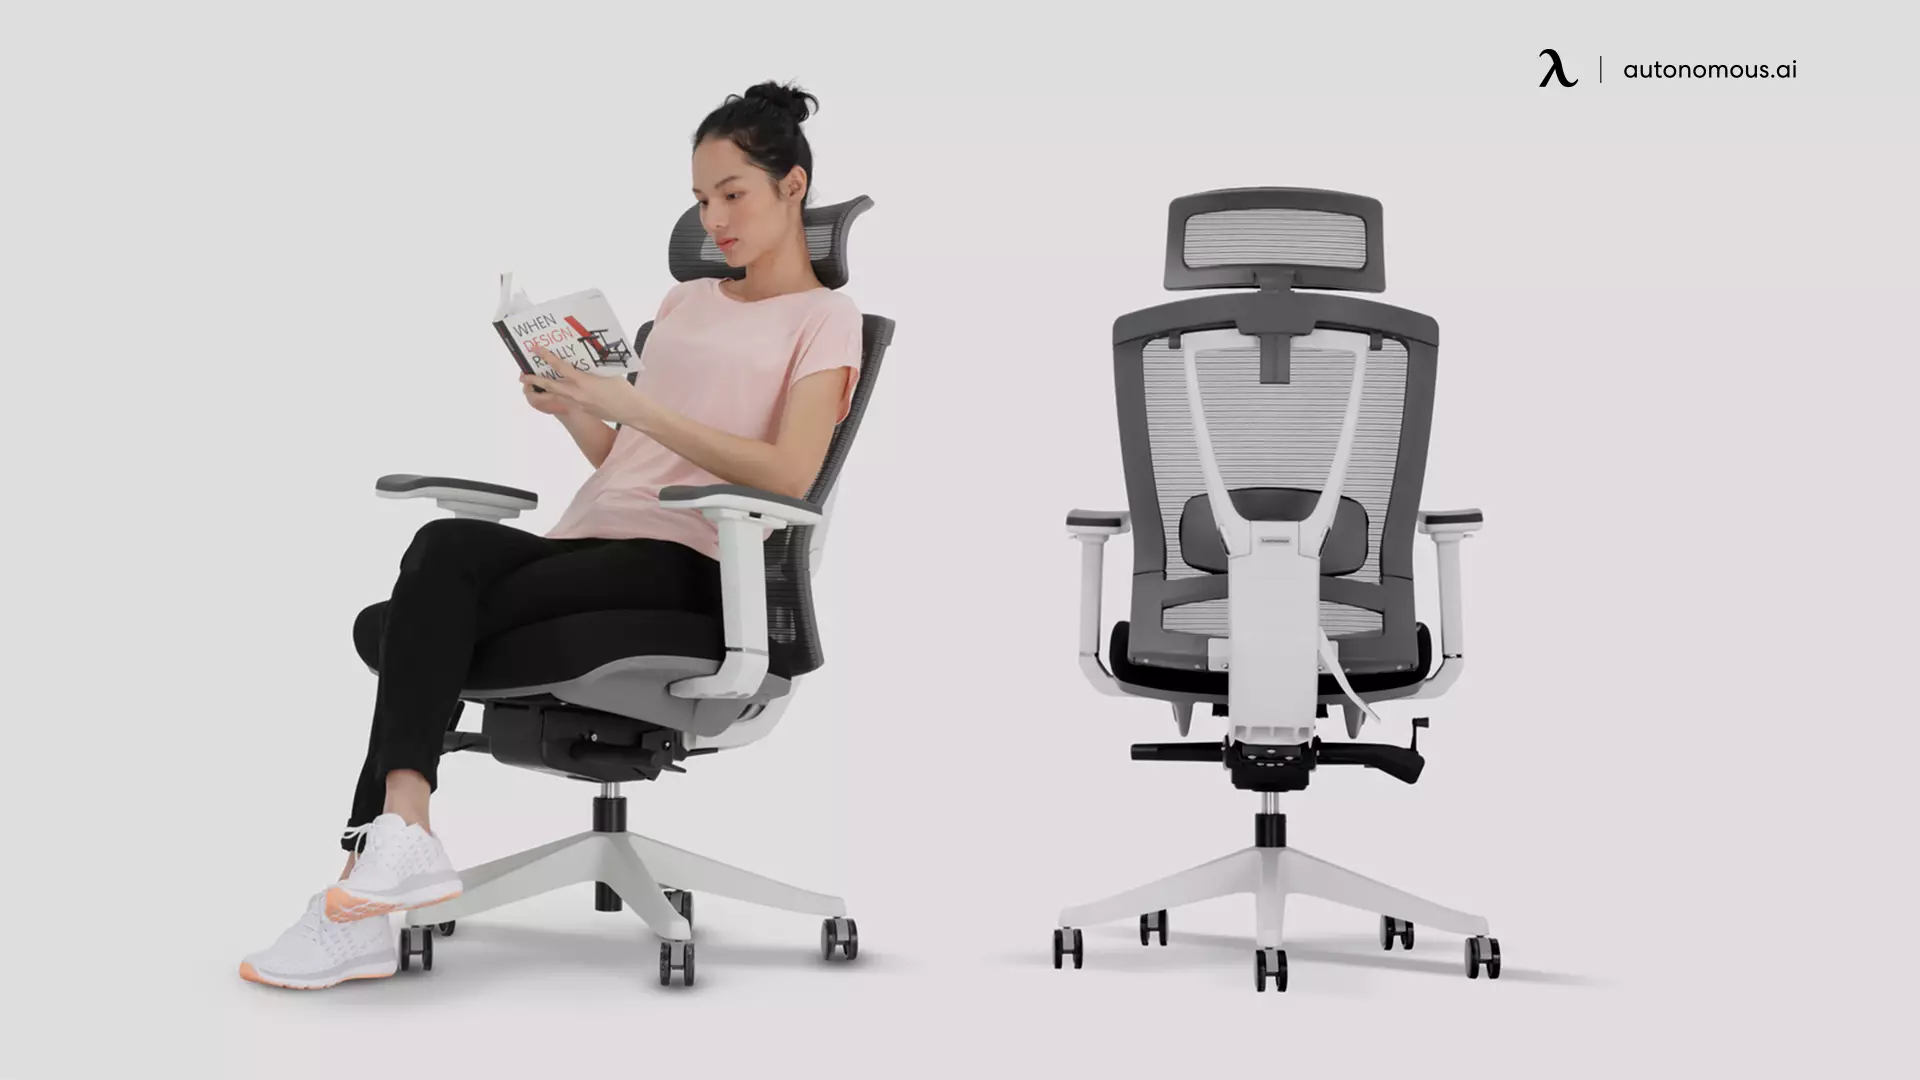 Ergonomic chair to remove headache when studying